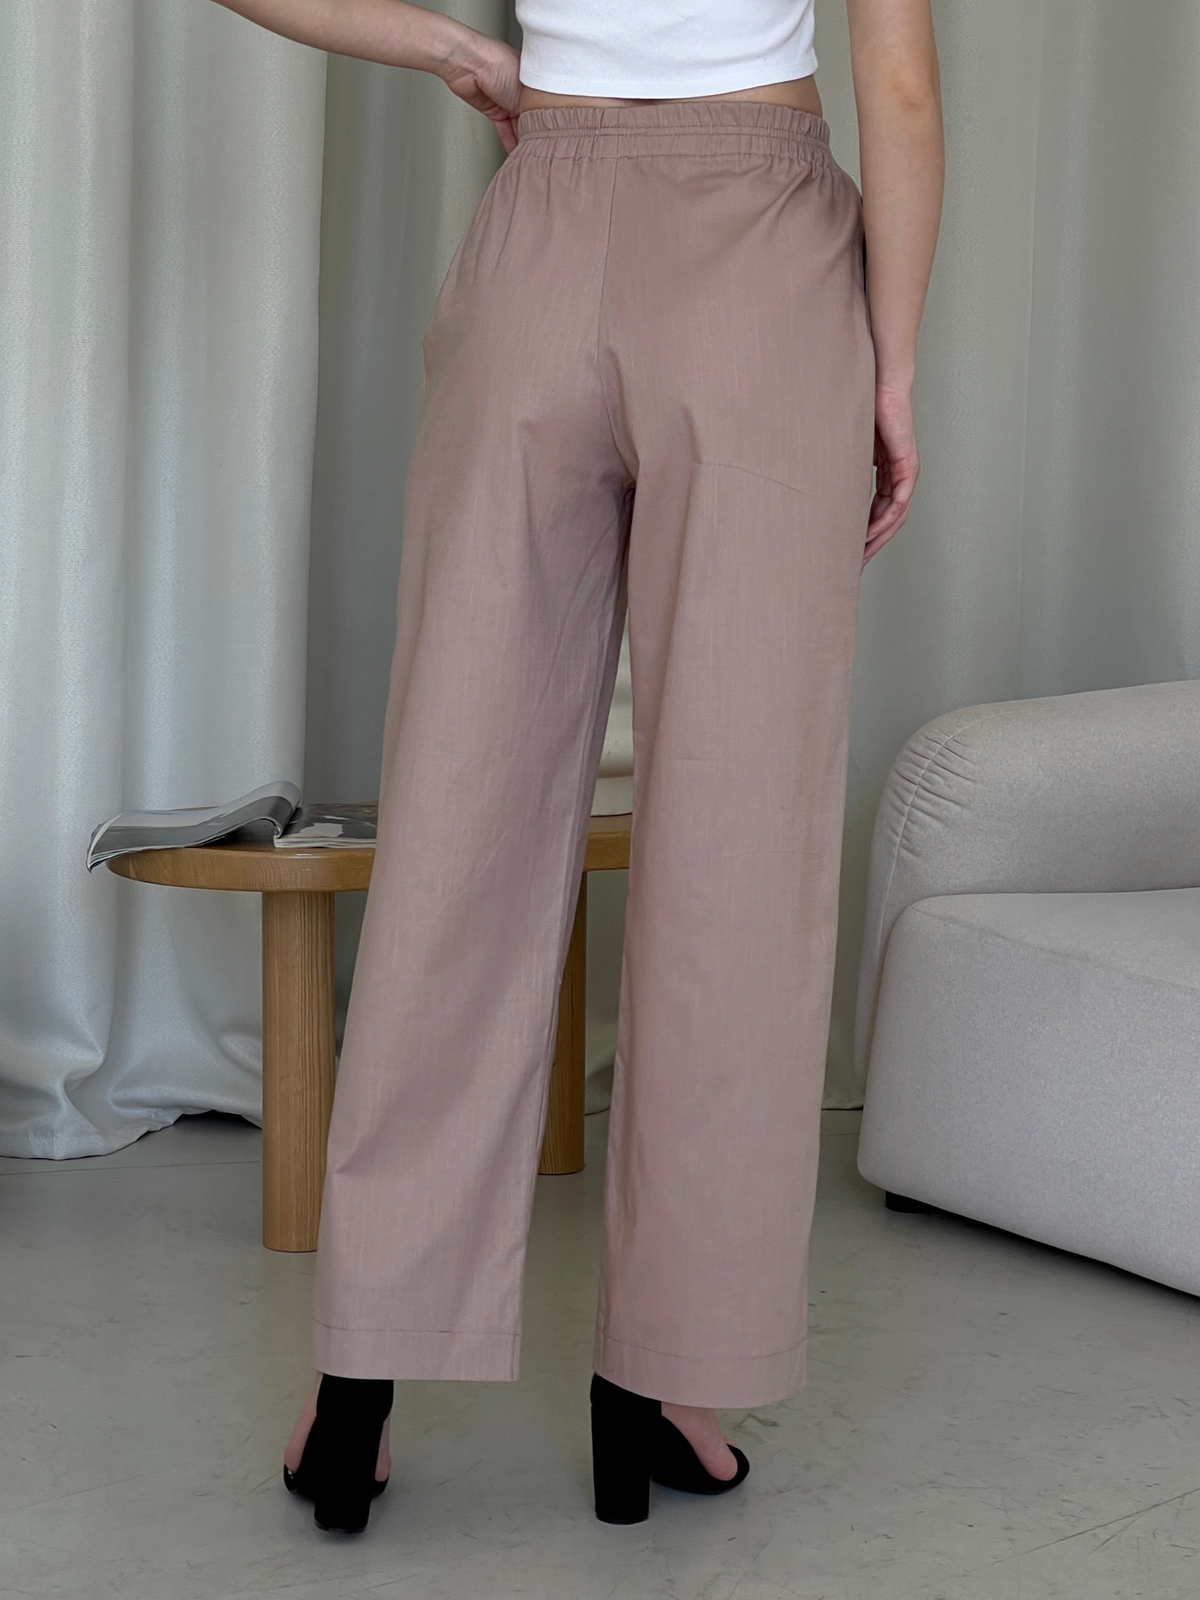 Льняные штаны палаццо бежевые Merlini Торио 600001204 размер 42-44 (S-M)